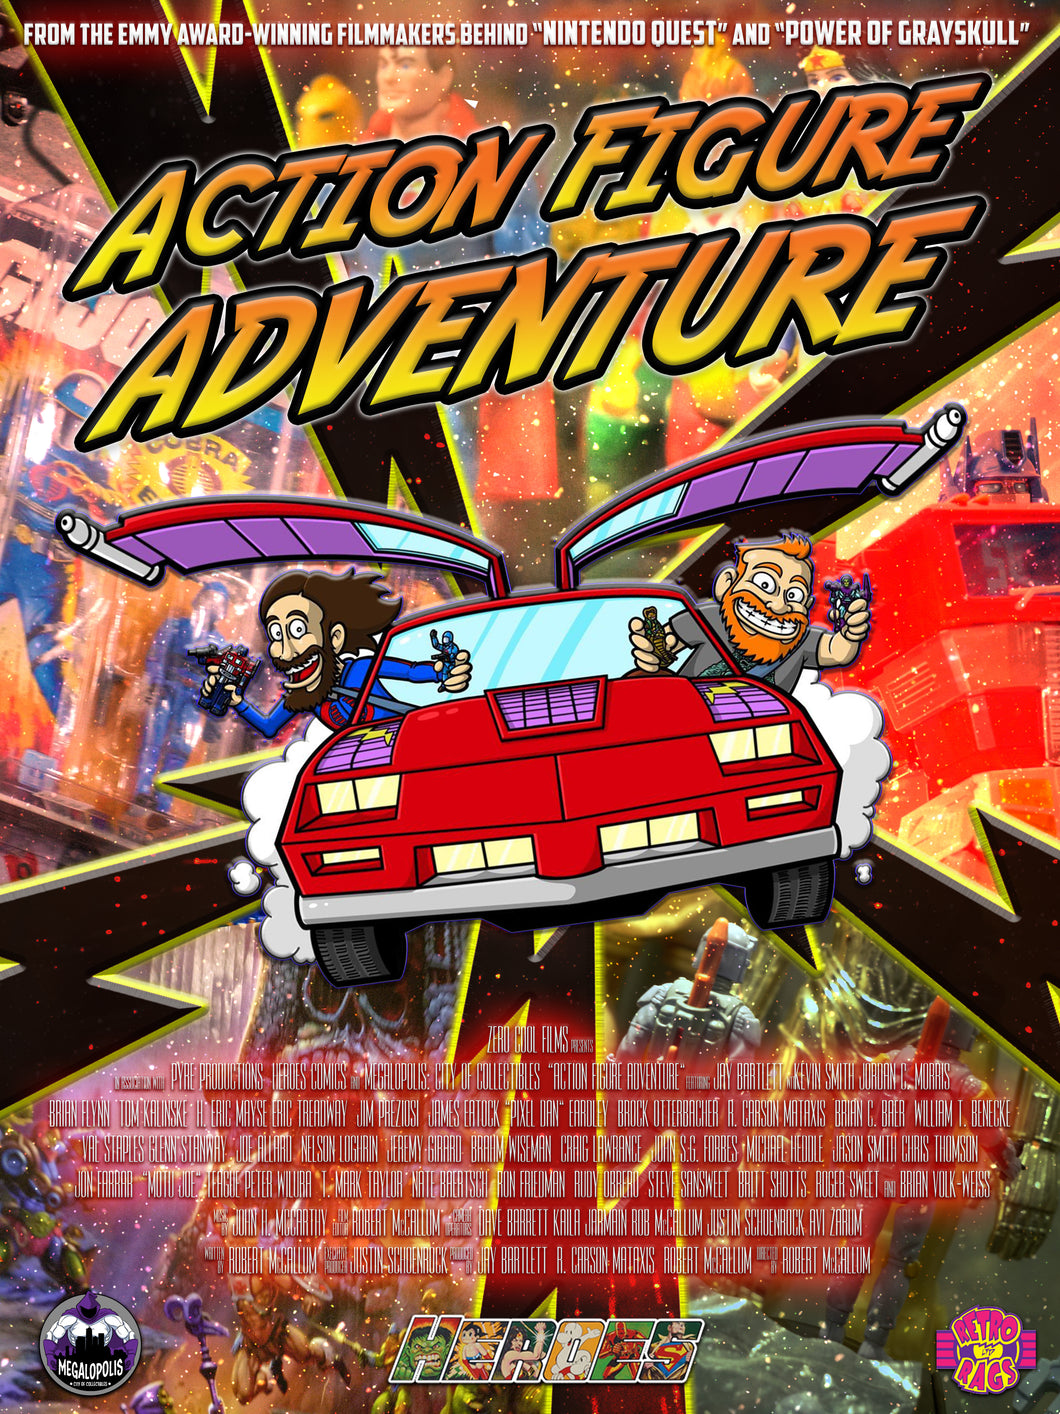 Action Figure Adventure Poster 18